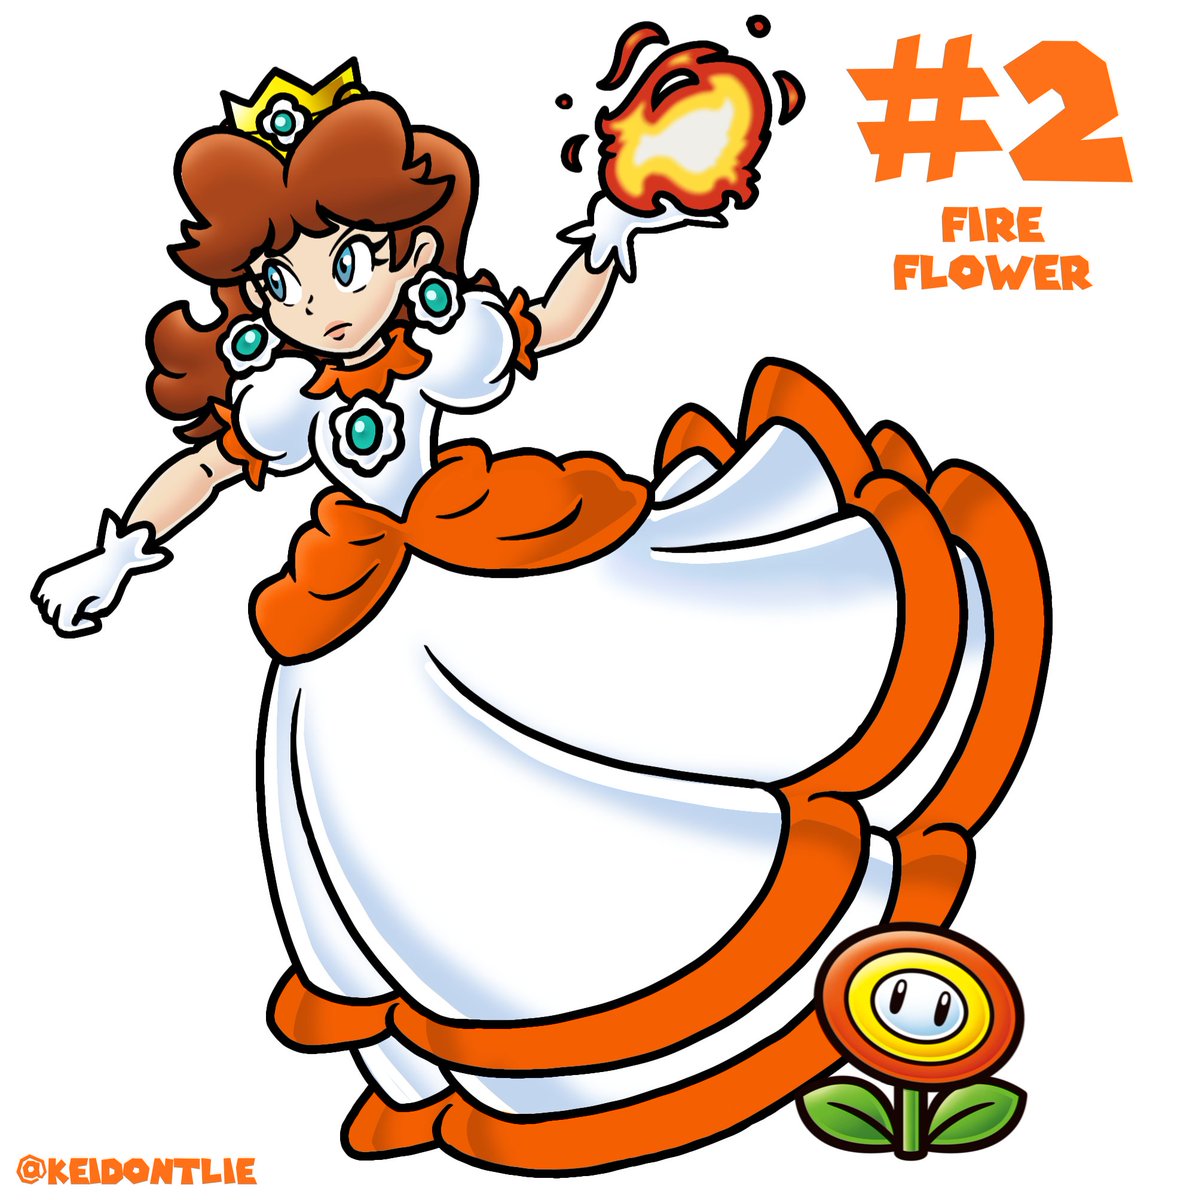 Next one is the first power up we ever saw Daisy using in the Mario Mainline's! The fire flower. 🔥🌼 Transforms Daisy into Fire Daisy. #PrincessDaisy #SuperMario #MarioBros #Fanart #PowerUpDaisy